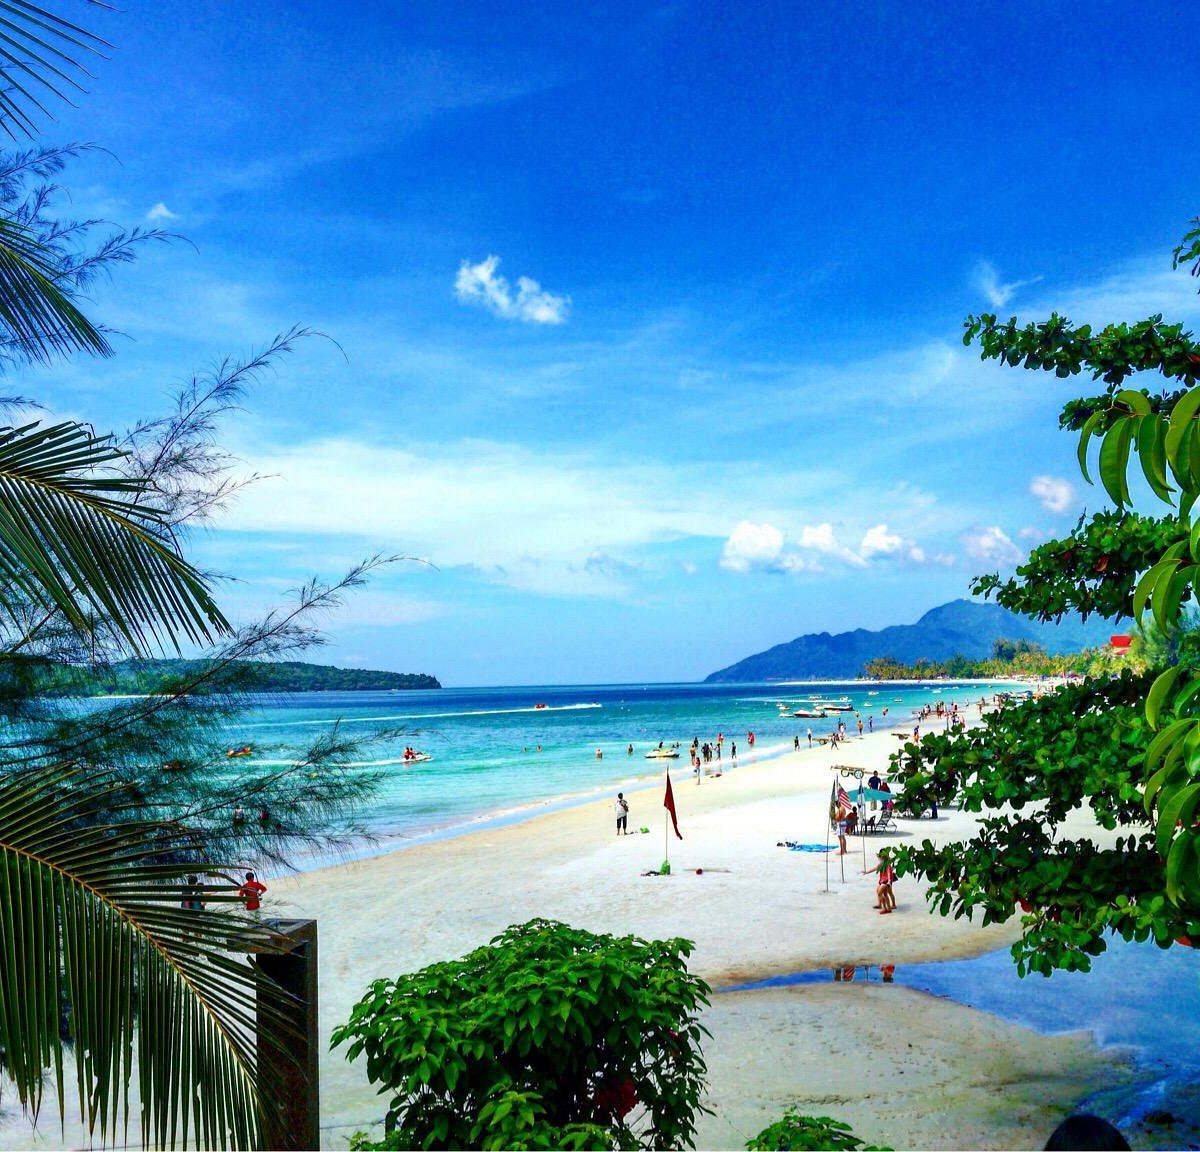 Cenang Beach (Pantai Cenang) - Aktuelle 2021 - Lohnt es sich?